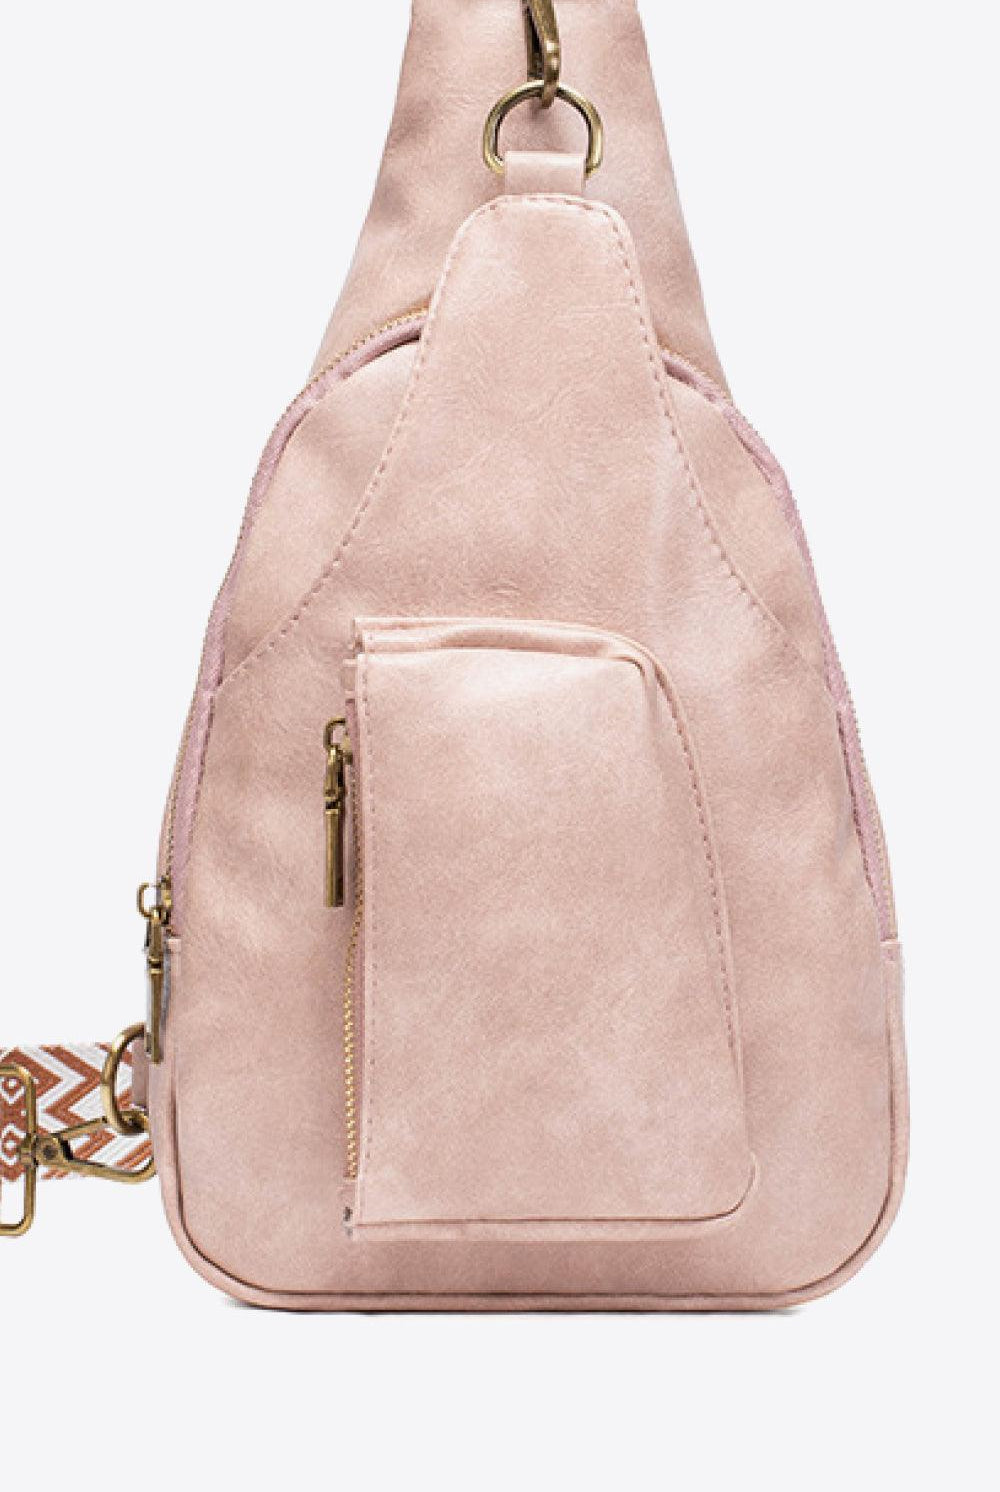 Luggage & Bags - Backpacks All The Feels Womens Pu Leather Sling Bag